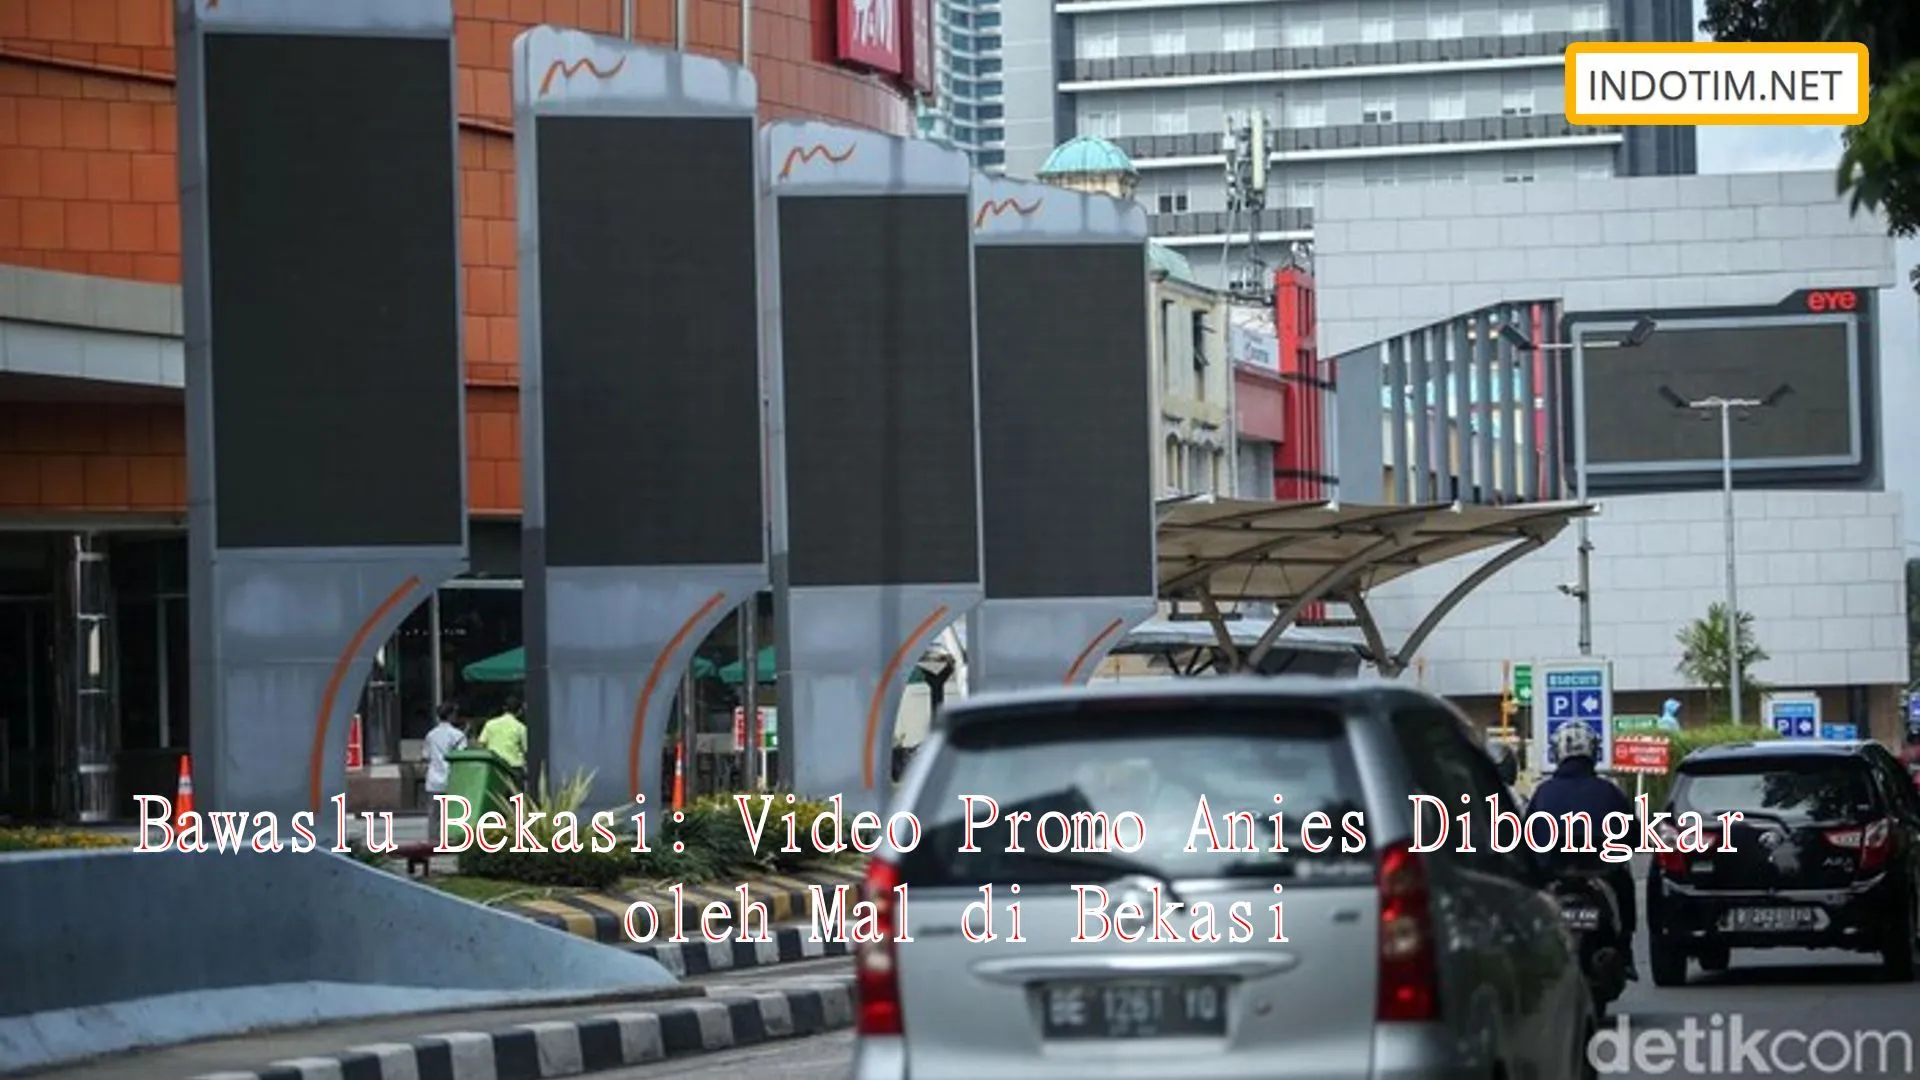 Bawaslu Bekasi: Video Promo Anies Dibongkar oleh Mal di Bekasi